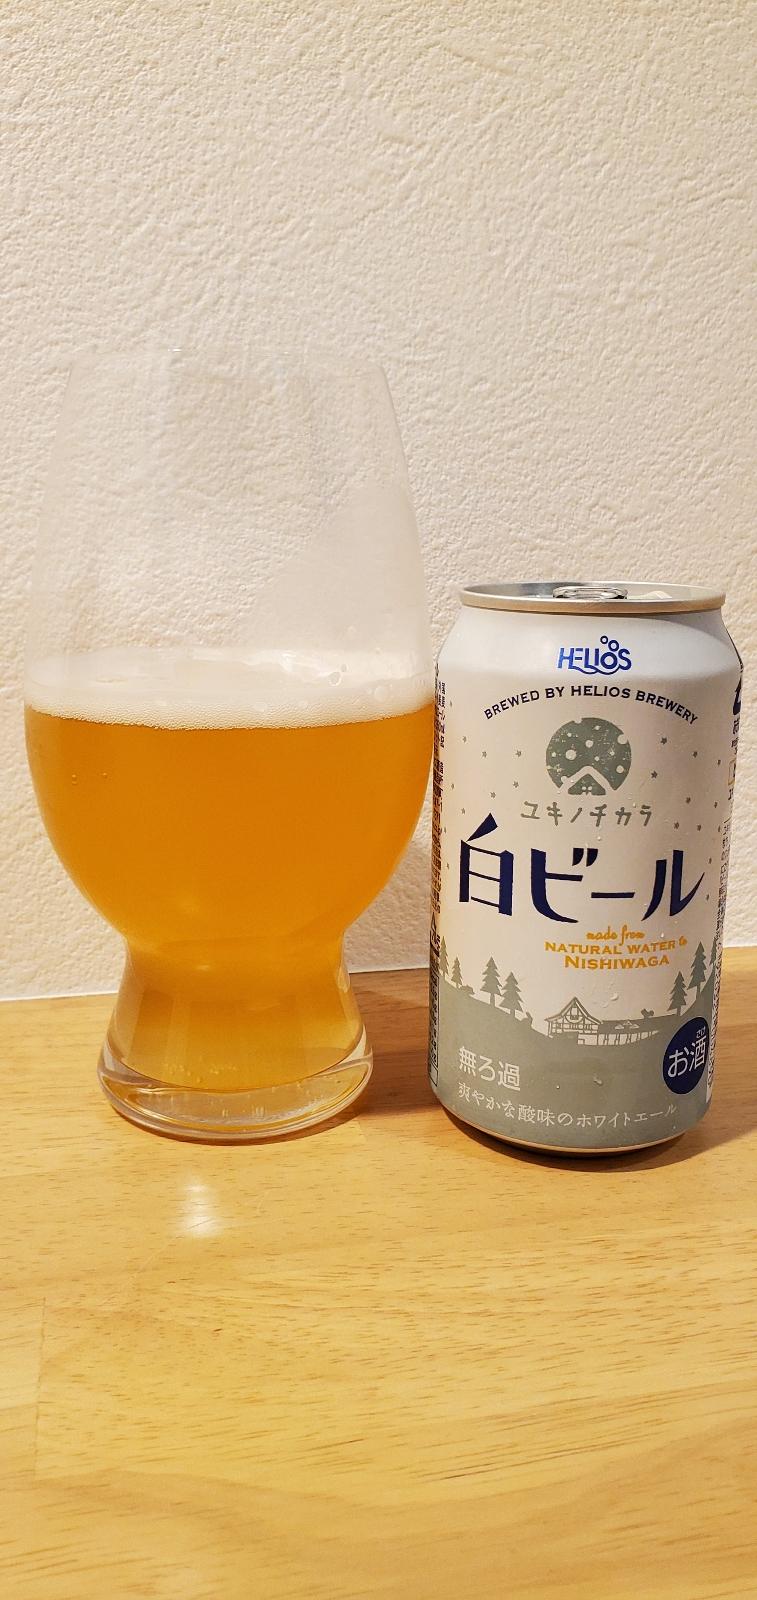 Helios Yuki no Chikara Shiro Beer